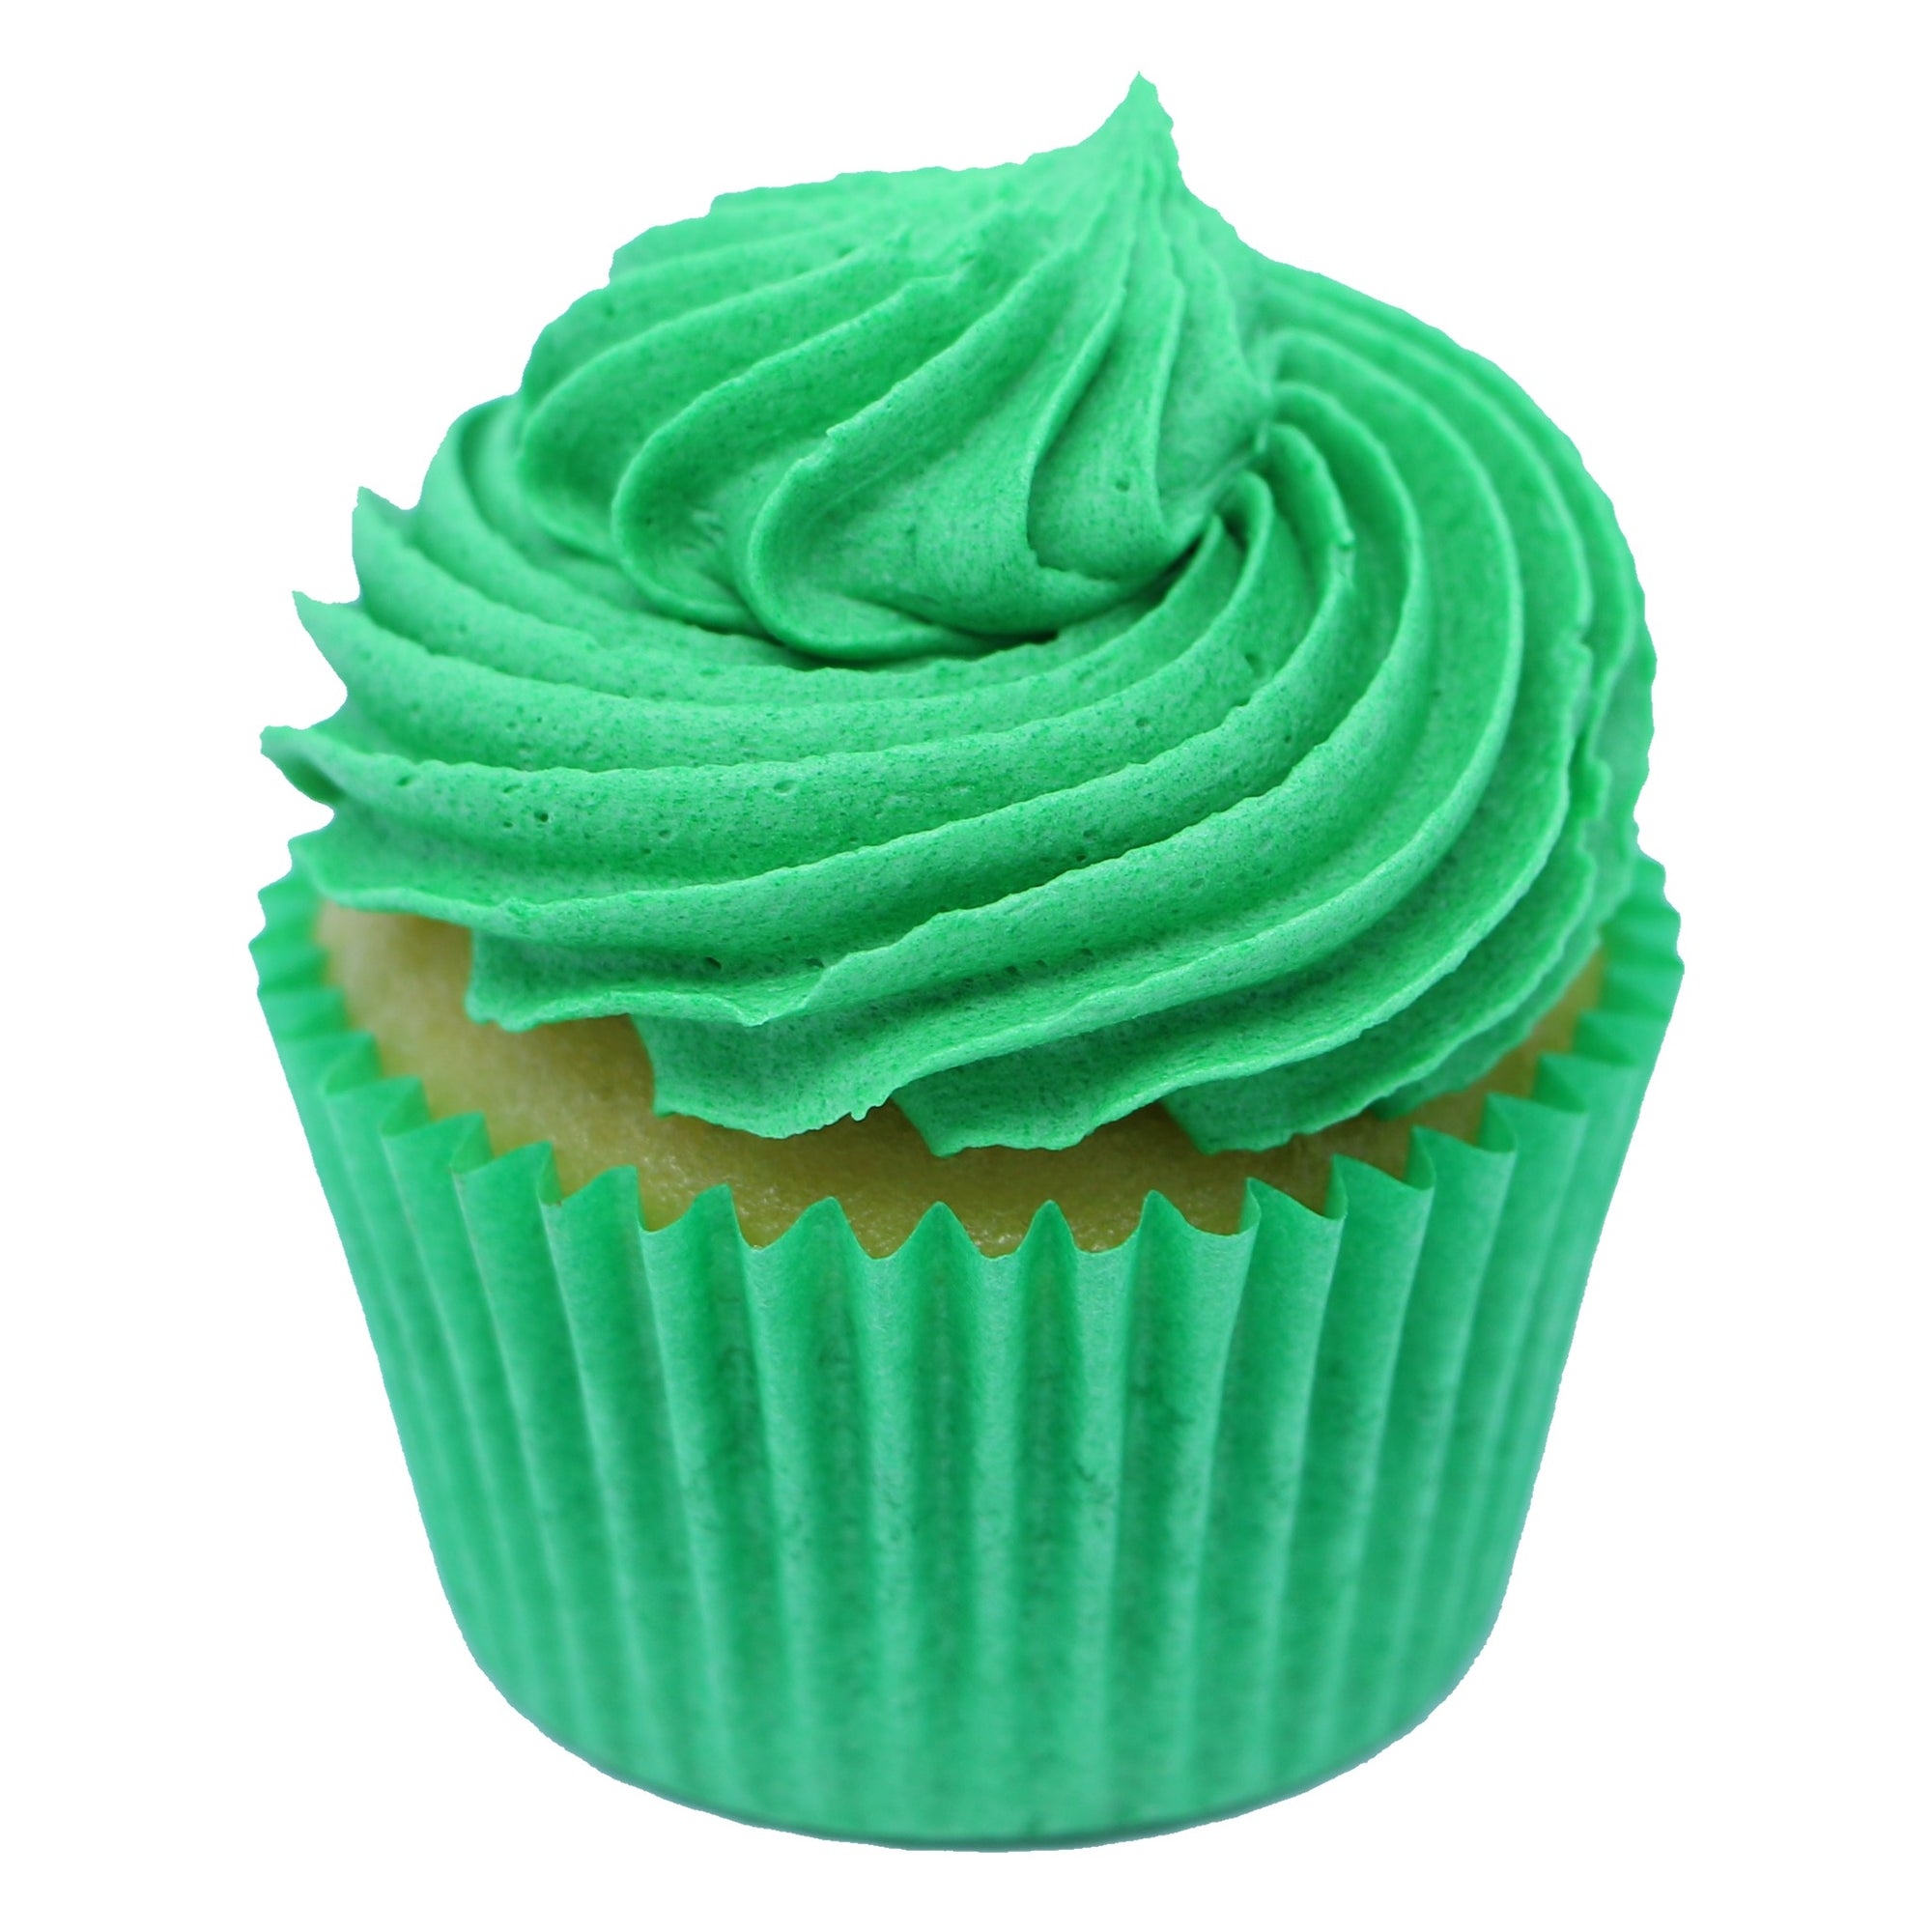 Mini Cupcake - Green - Treats2eat - Wedding & Birthday Party Dessert Catering Near Me